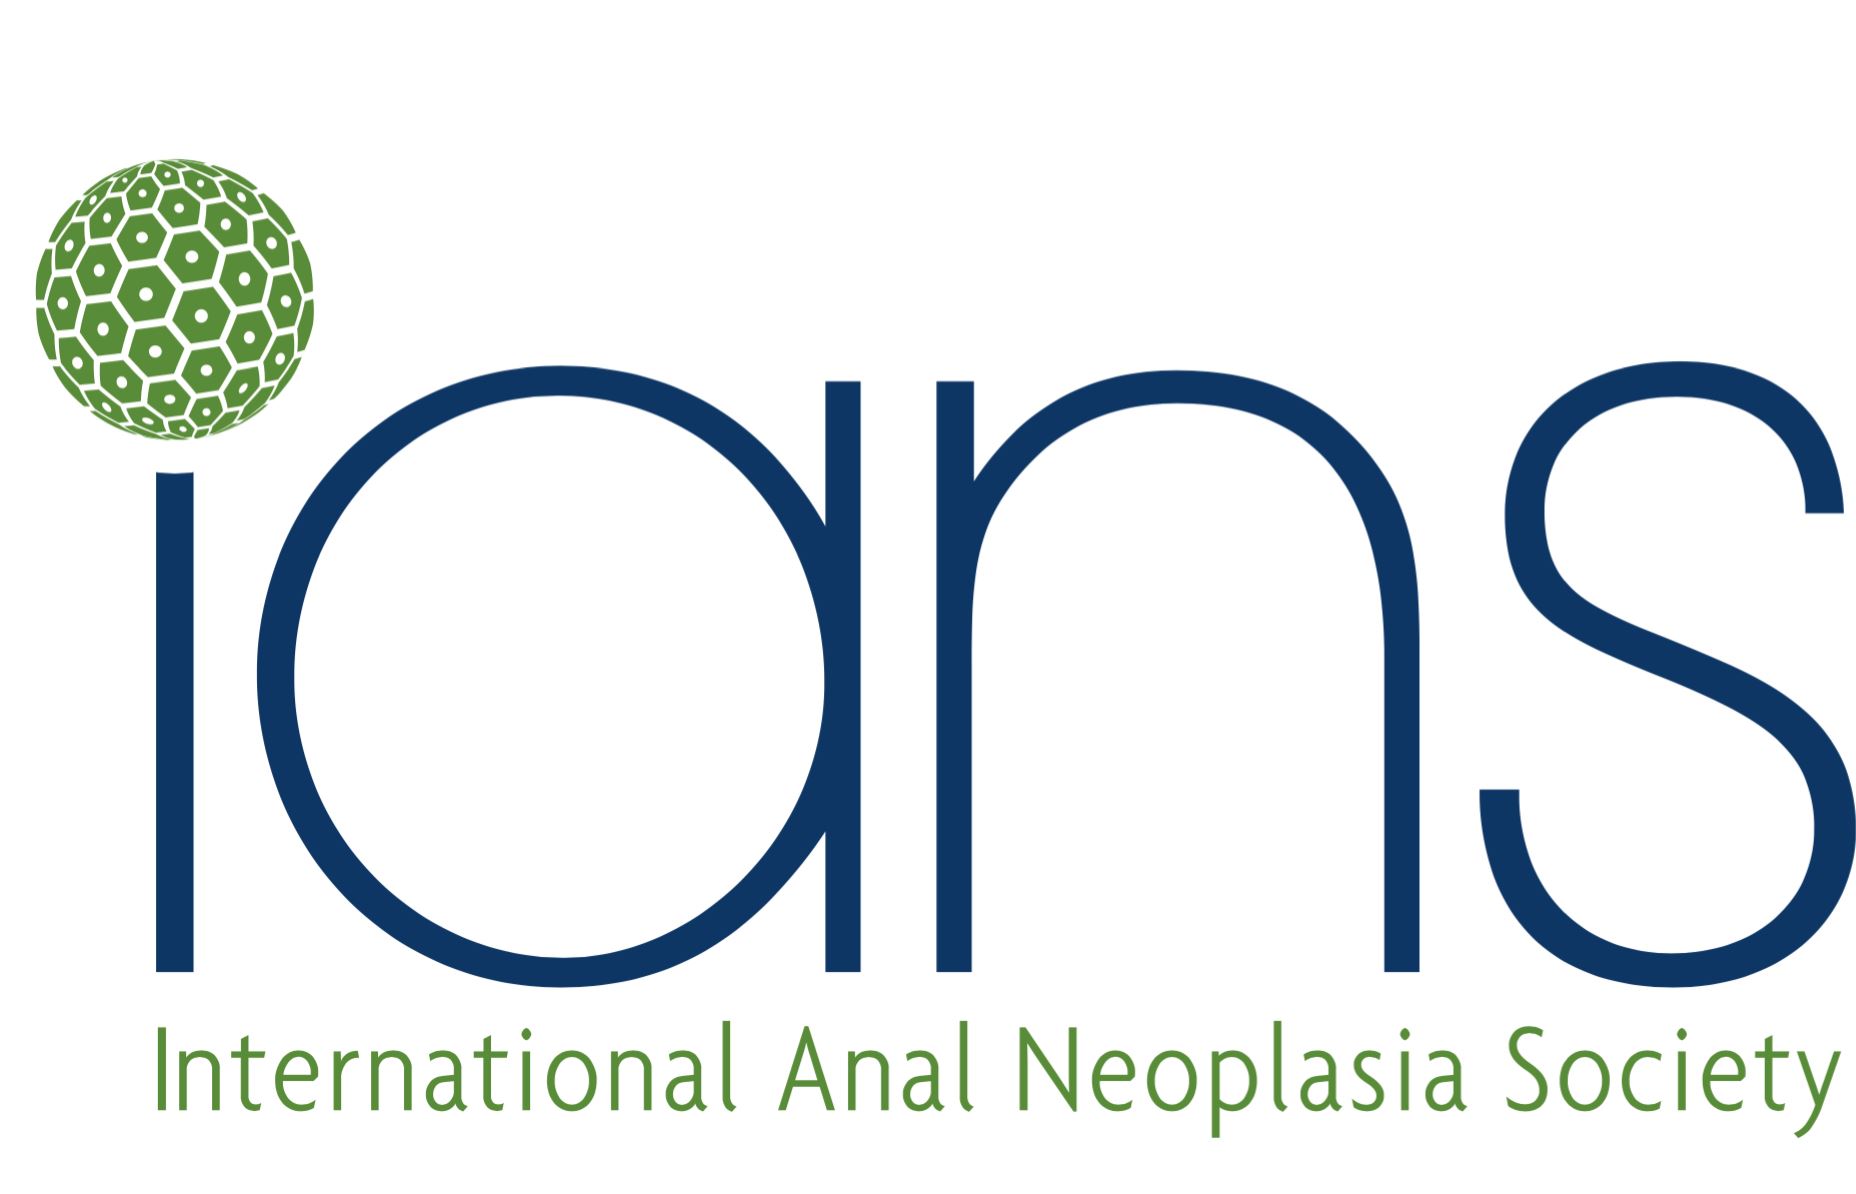 International Anal Neoplasia Society - Virginia USA United States of America